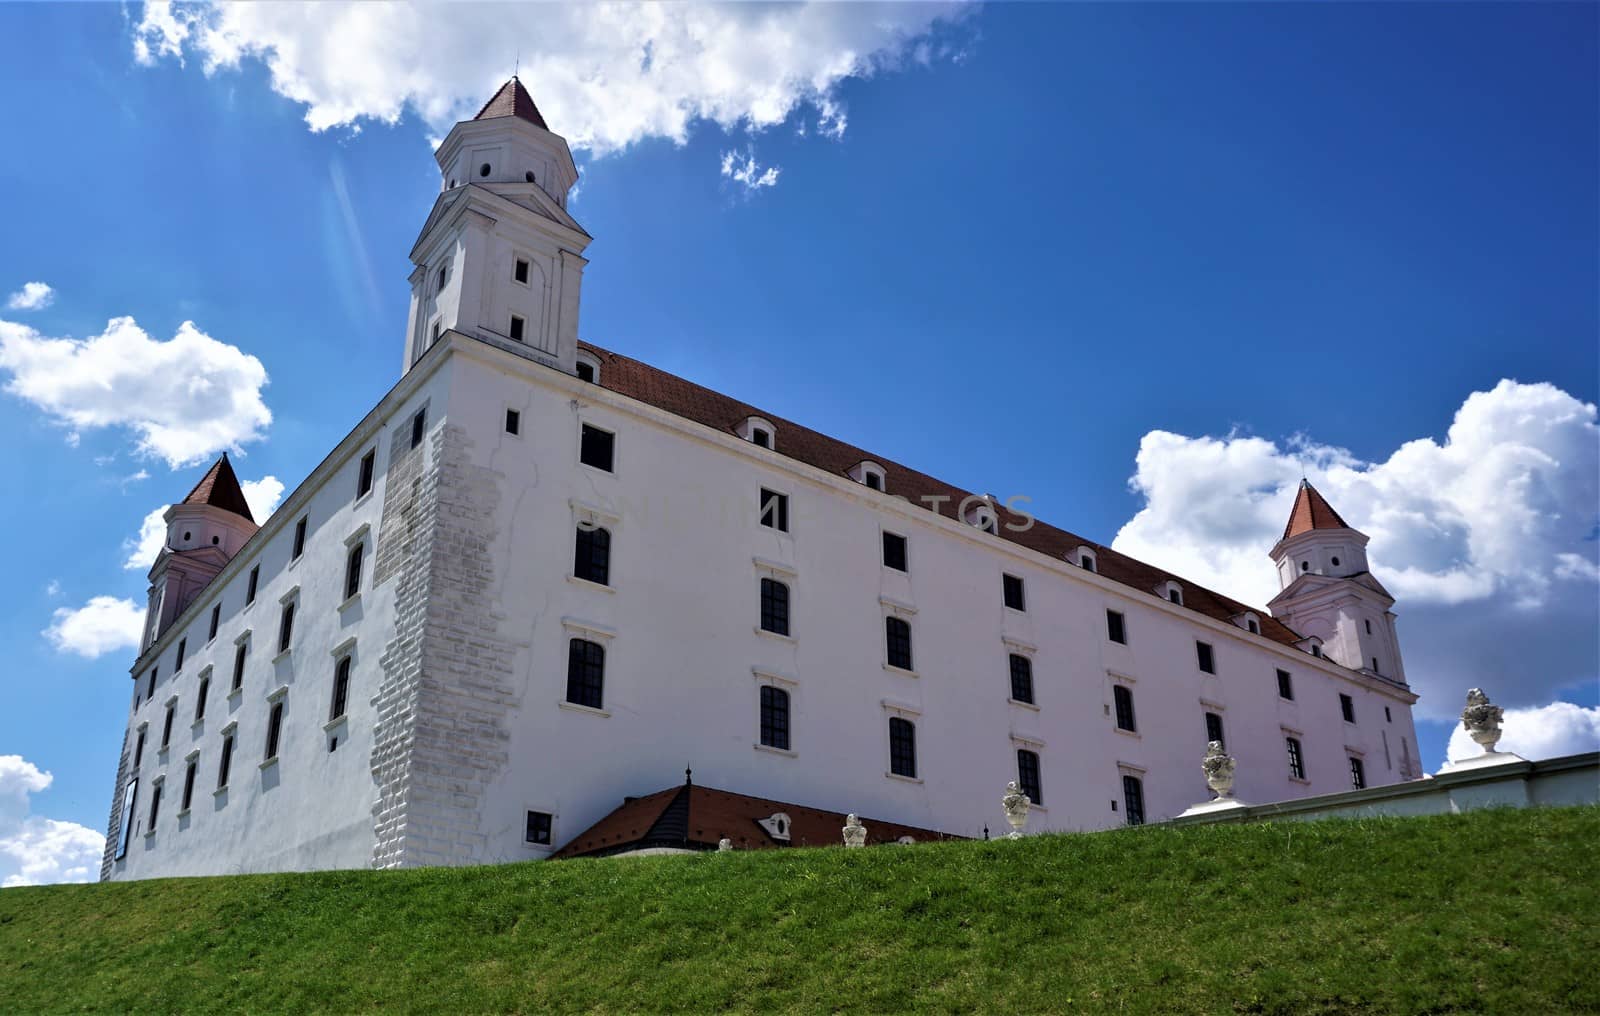 Bratislava castle, meadow and blue sky in summer